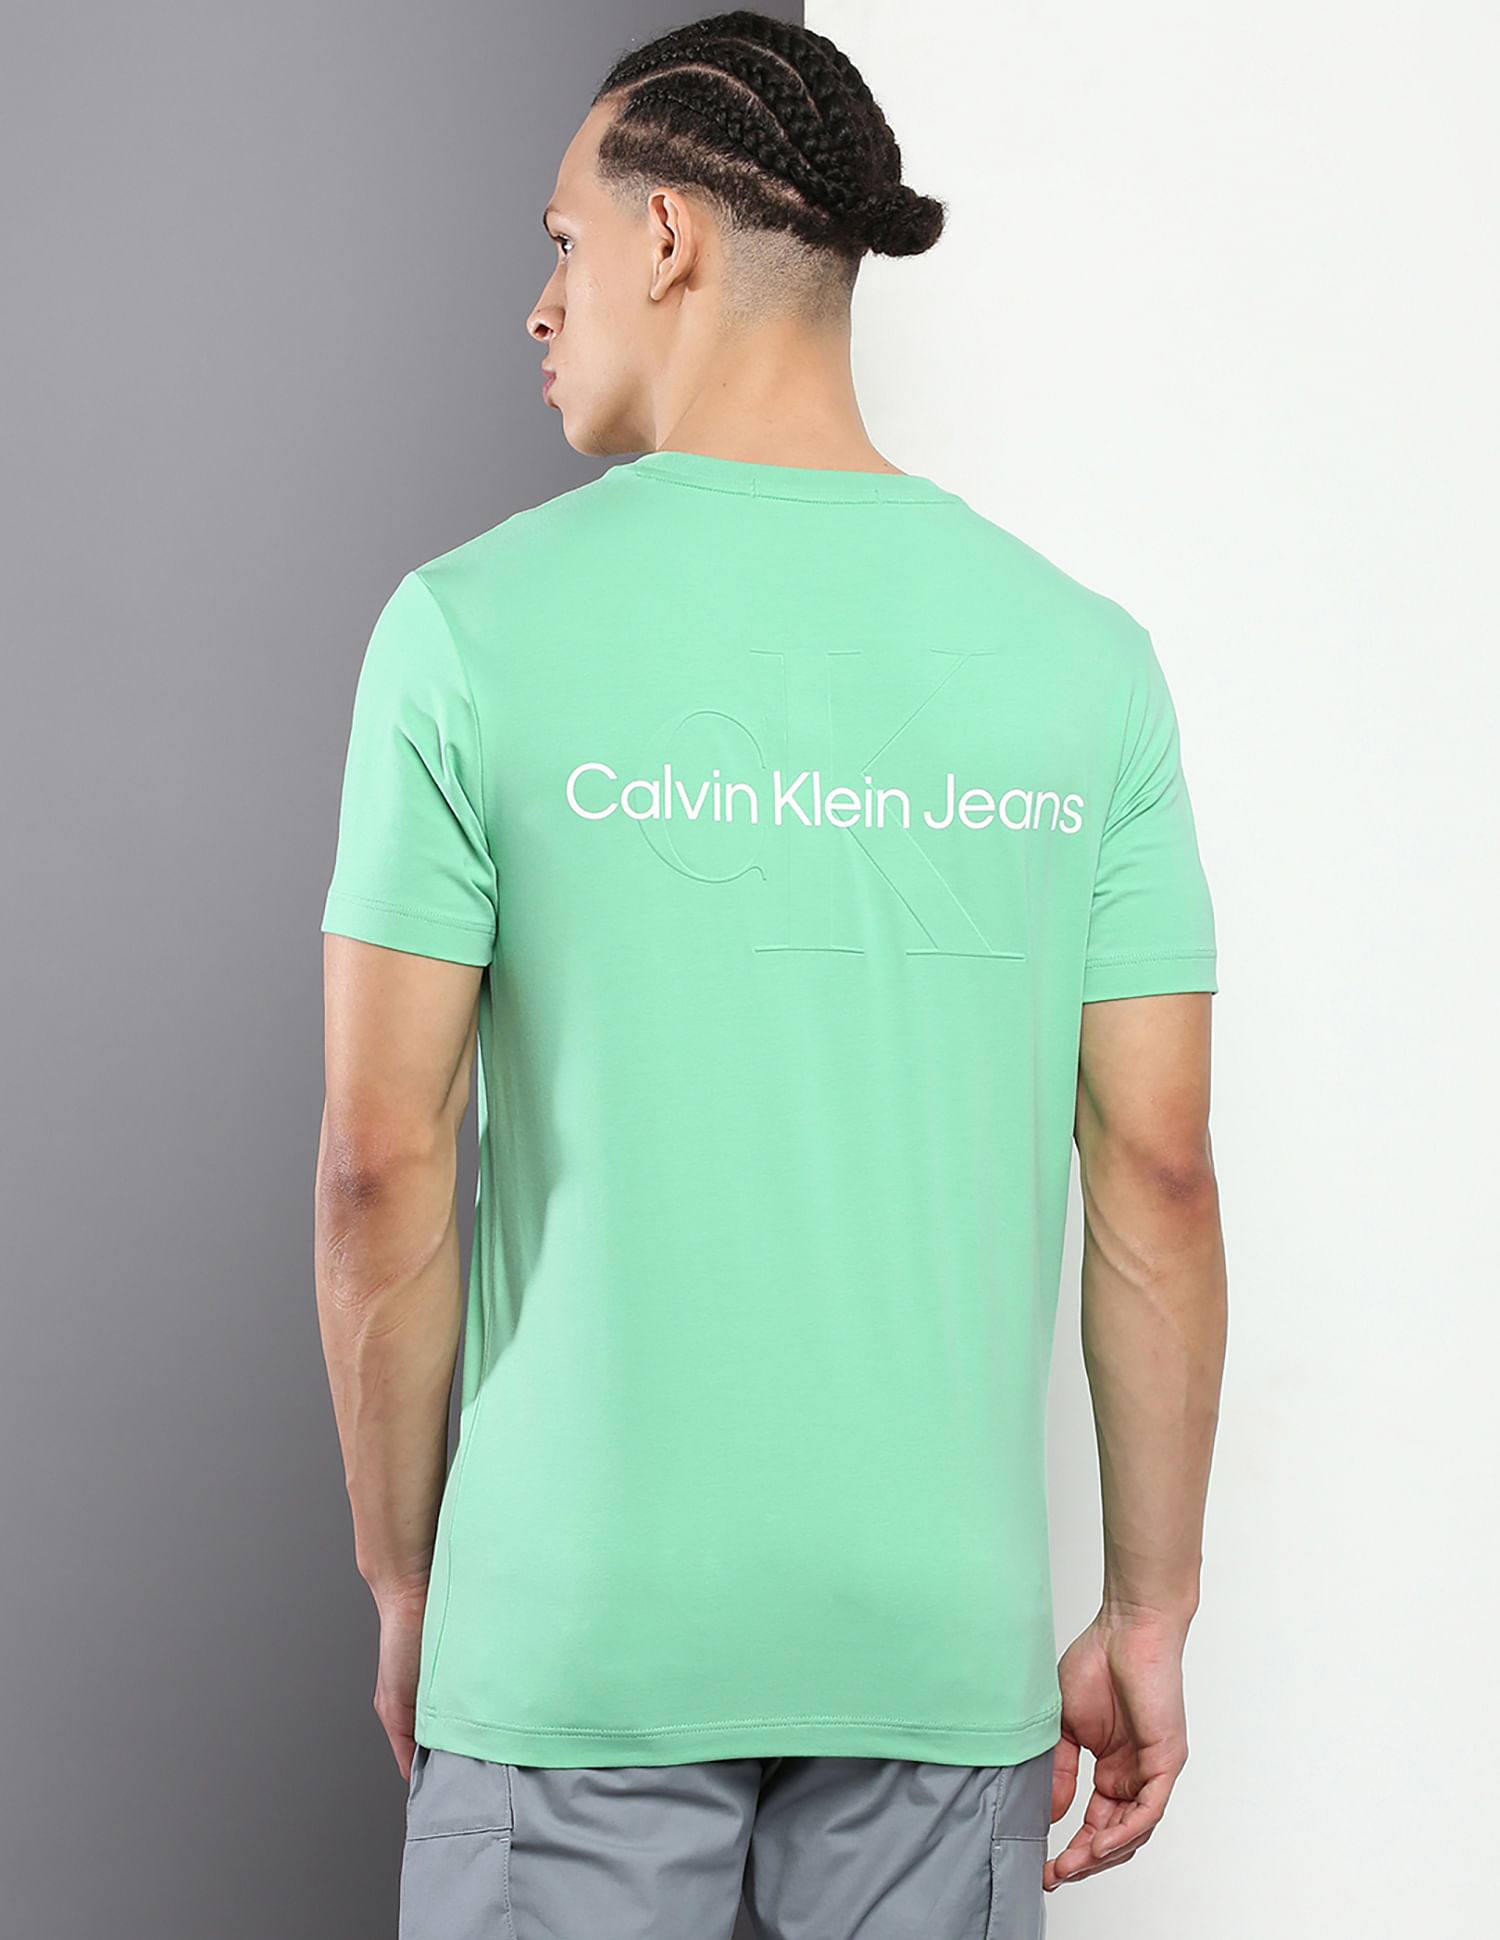 Buy Calvin Klein Jeans Crew Neck Brand Print T-Shirt